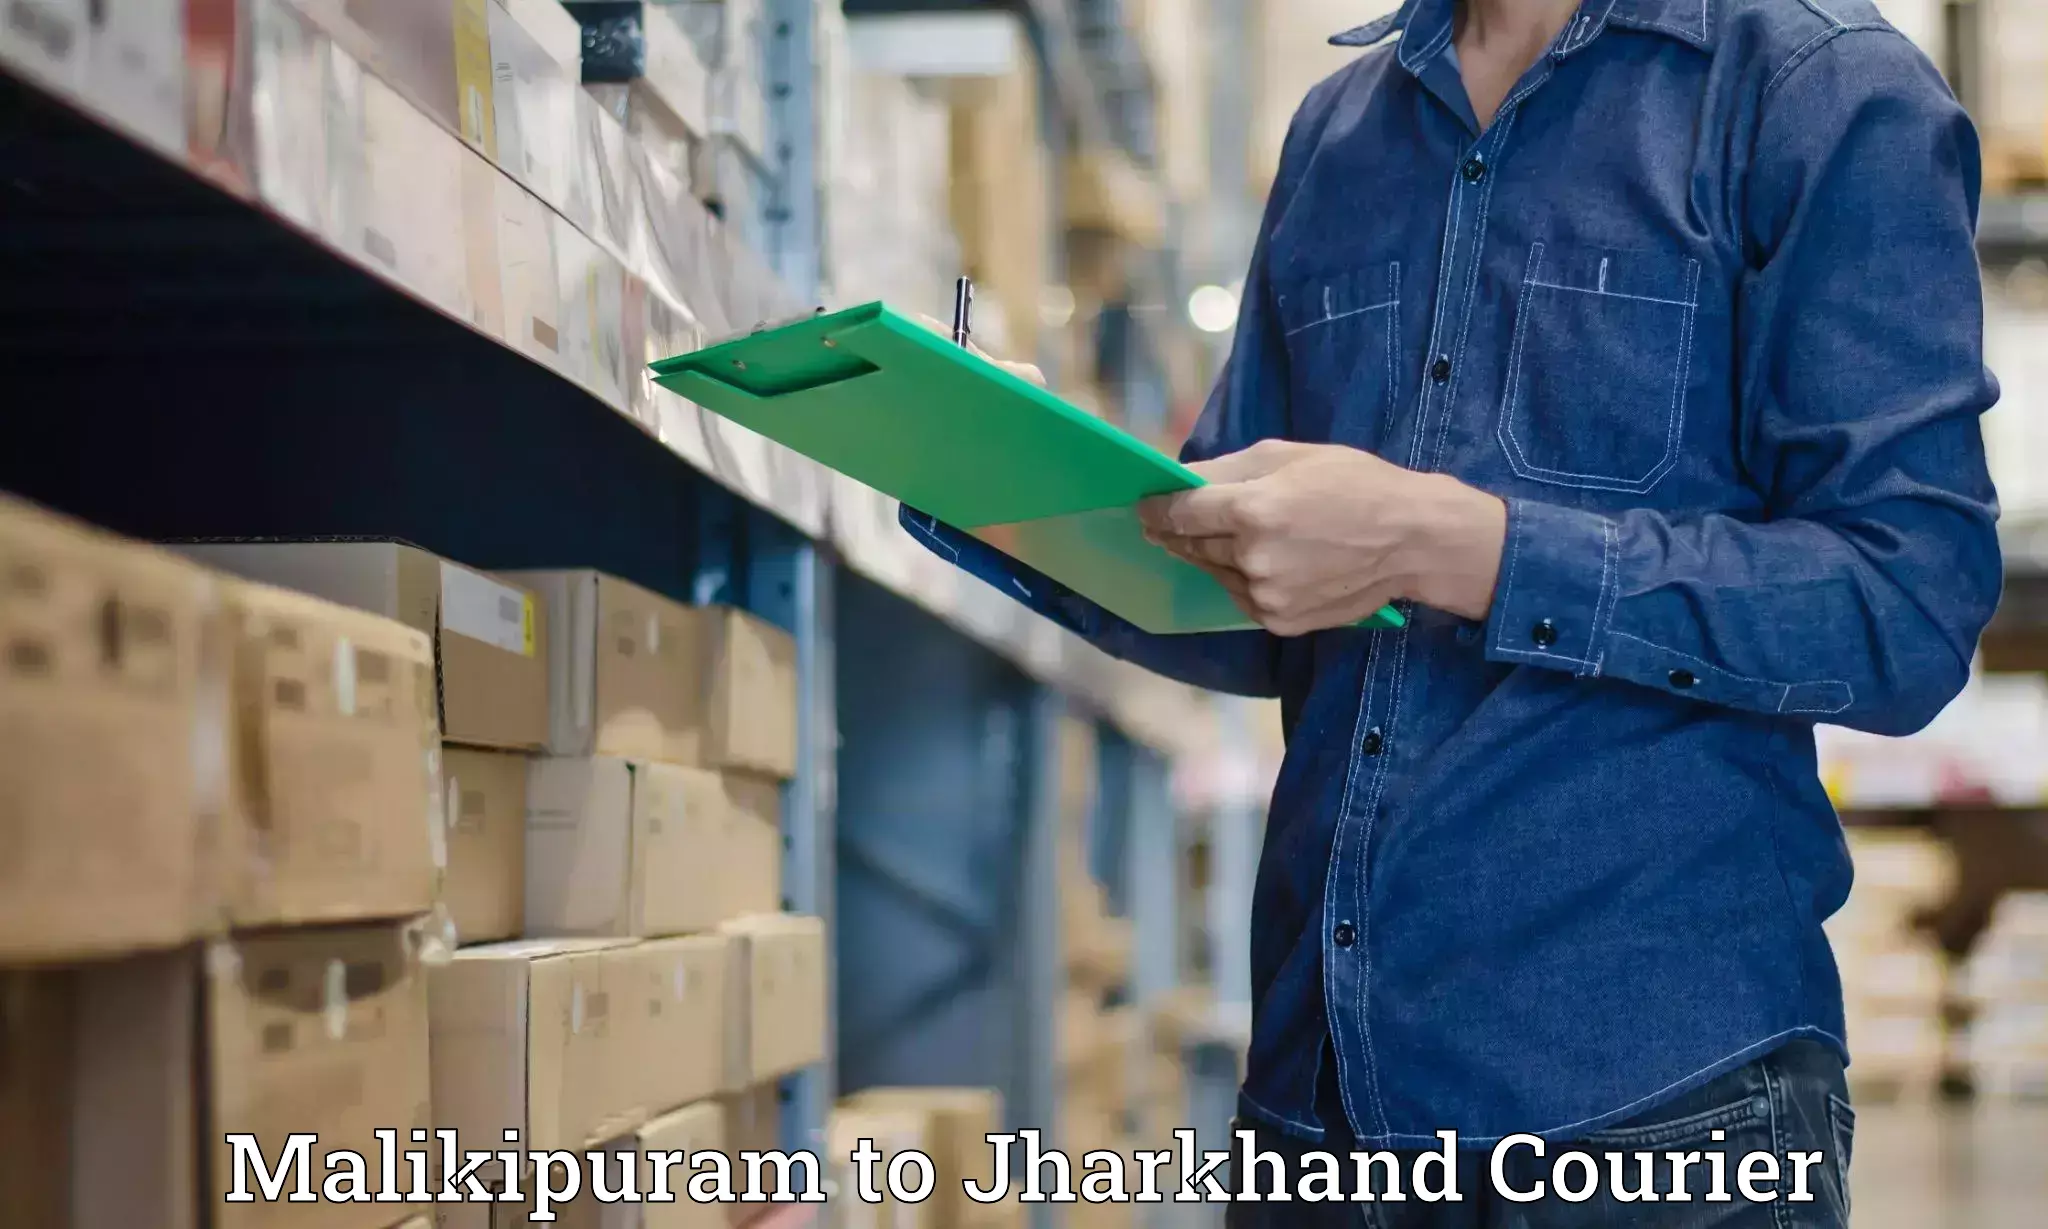 Fast-track shipping solutions Malikipuram to Jamtara